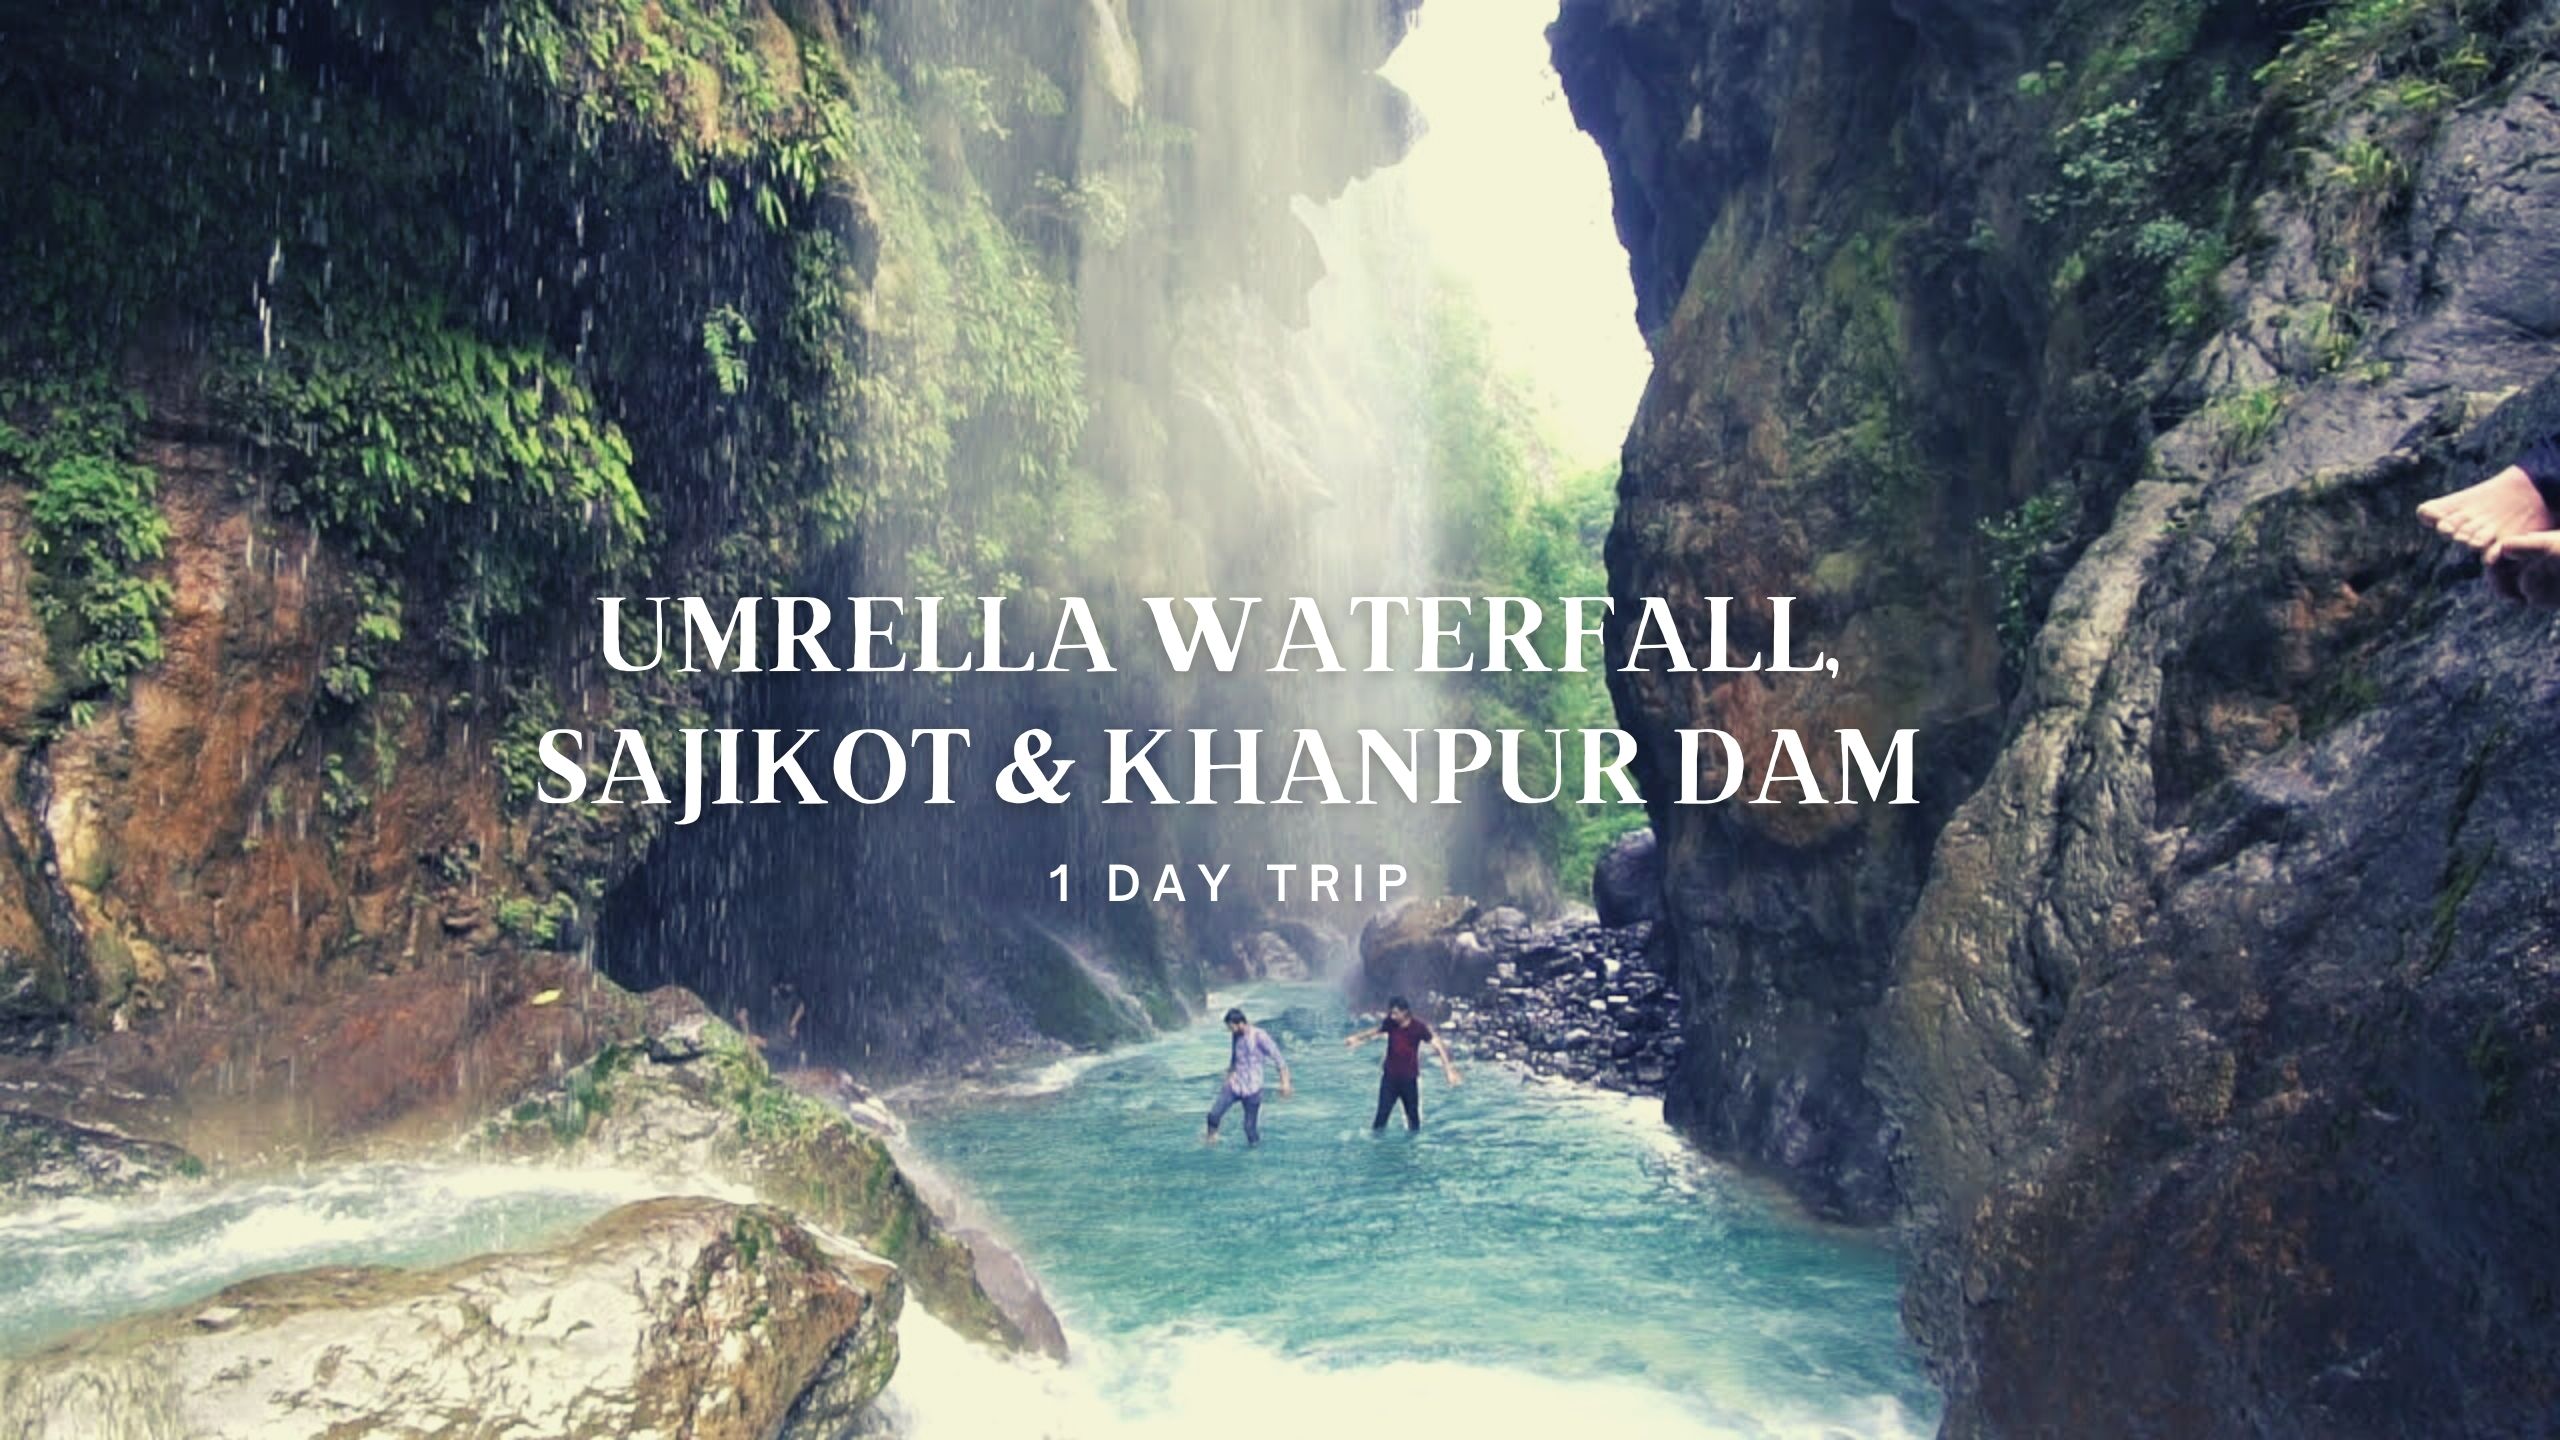 One Day tour to Umrella Waterfall, Sajikot & Khanpur Dam